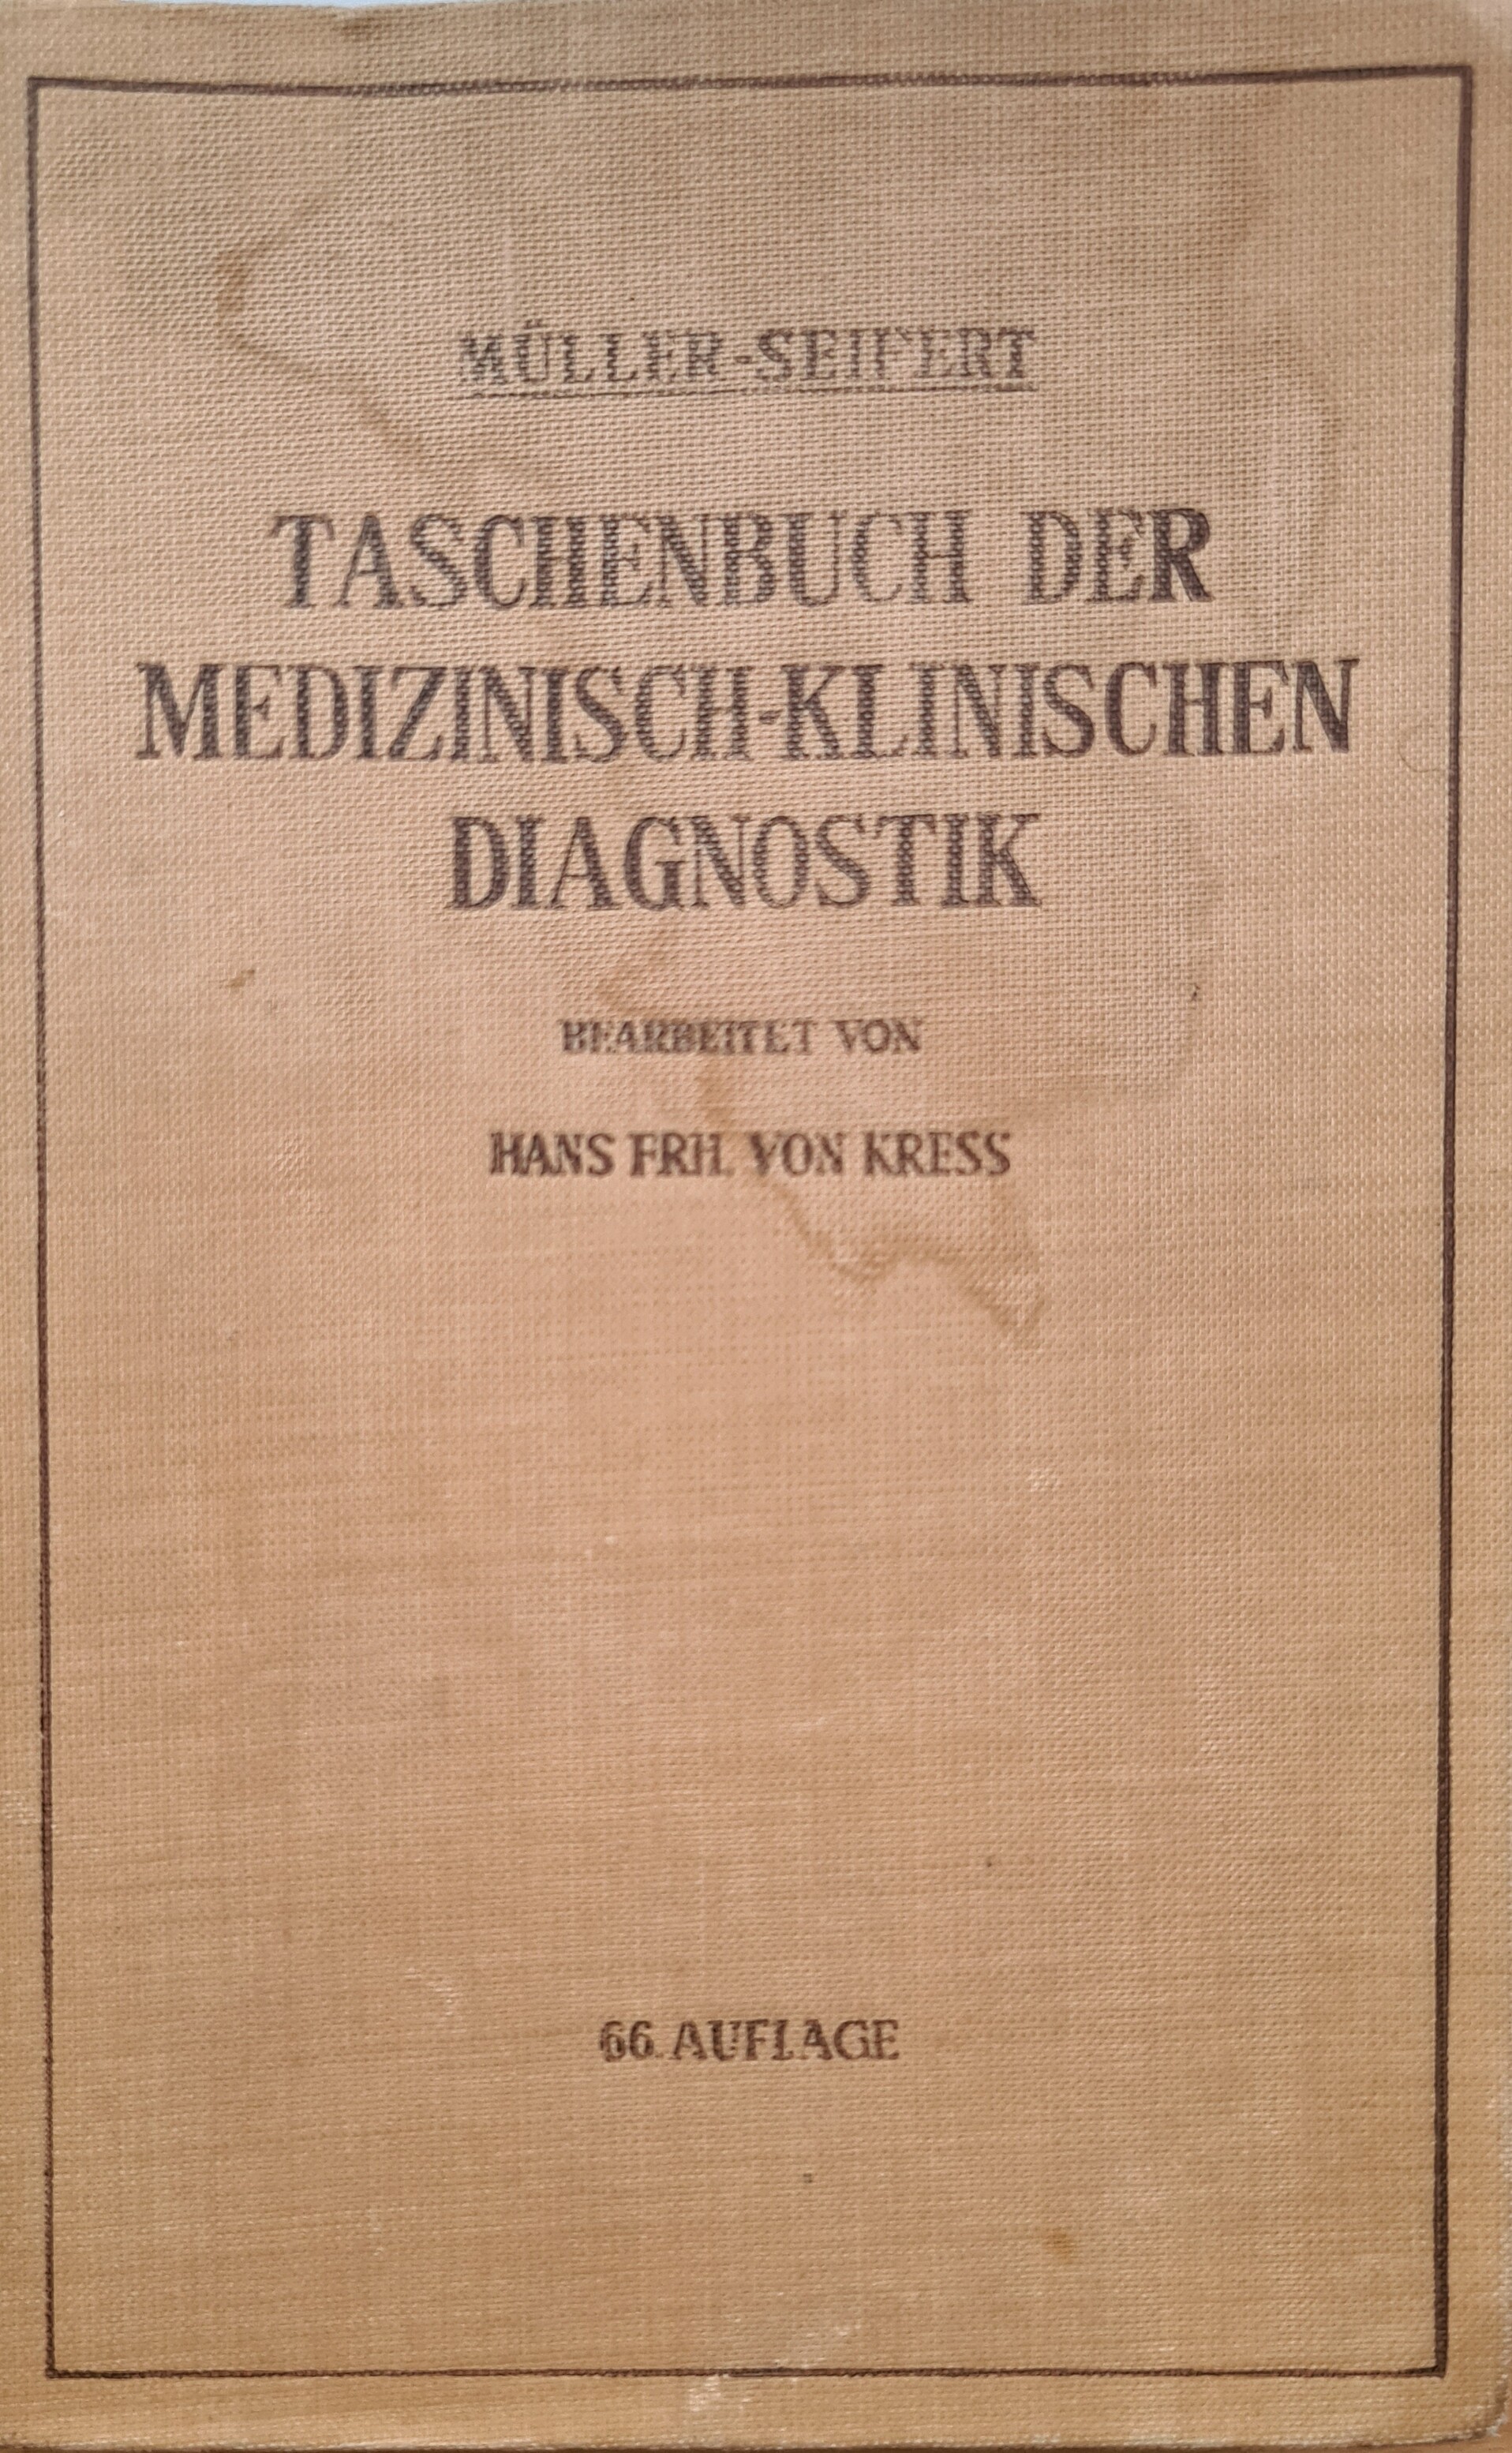 Taschenbuch der medizinisch-klinischen Diagnostik (Krankenhausmuseum Bielefeld e.V. CC BY-NC-SA)